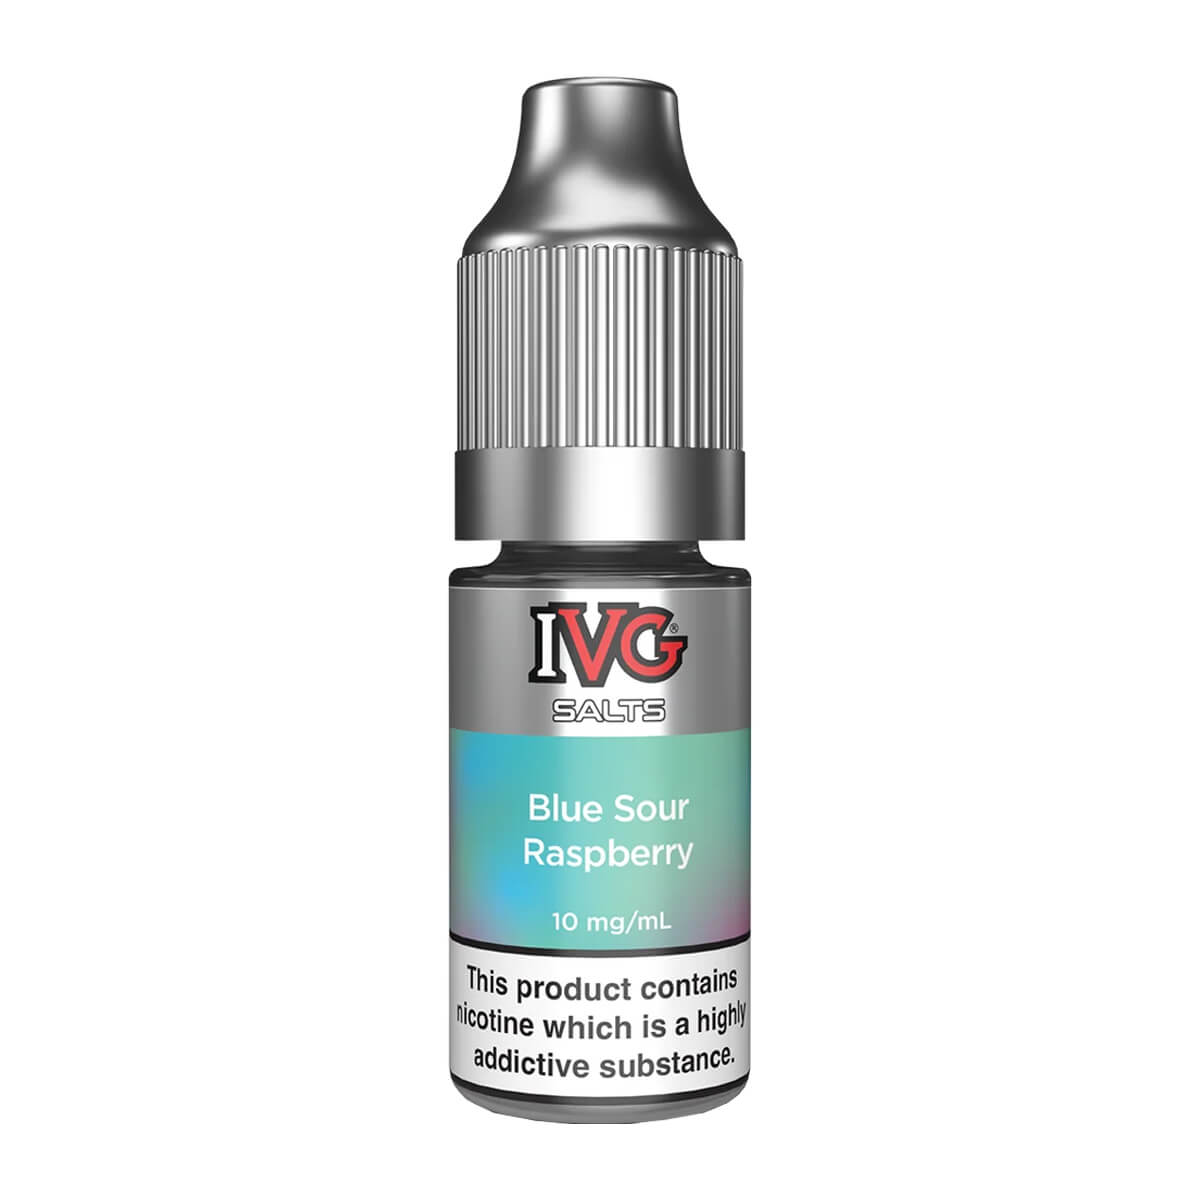 Blue Sour Raspberry Nic Salt E-Liquid by IVG